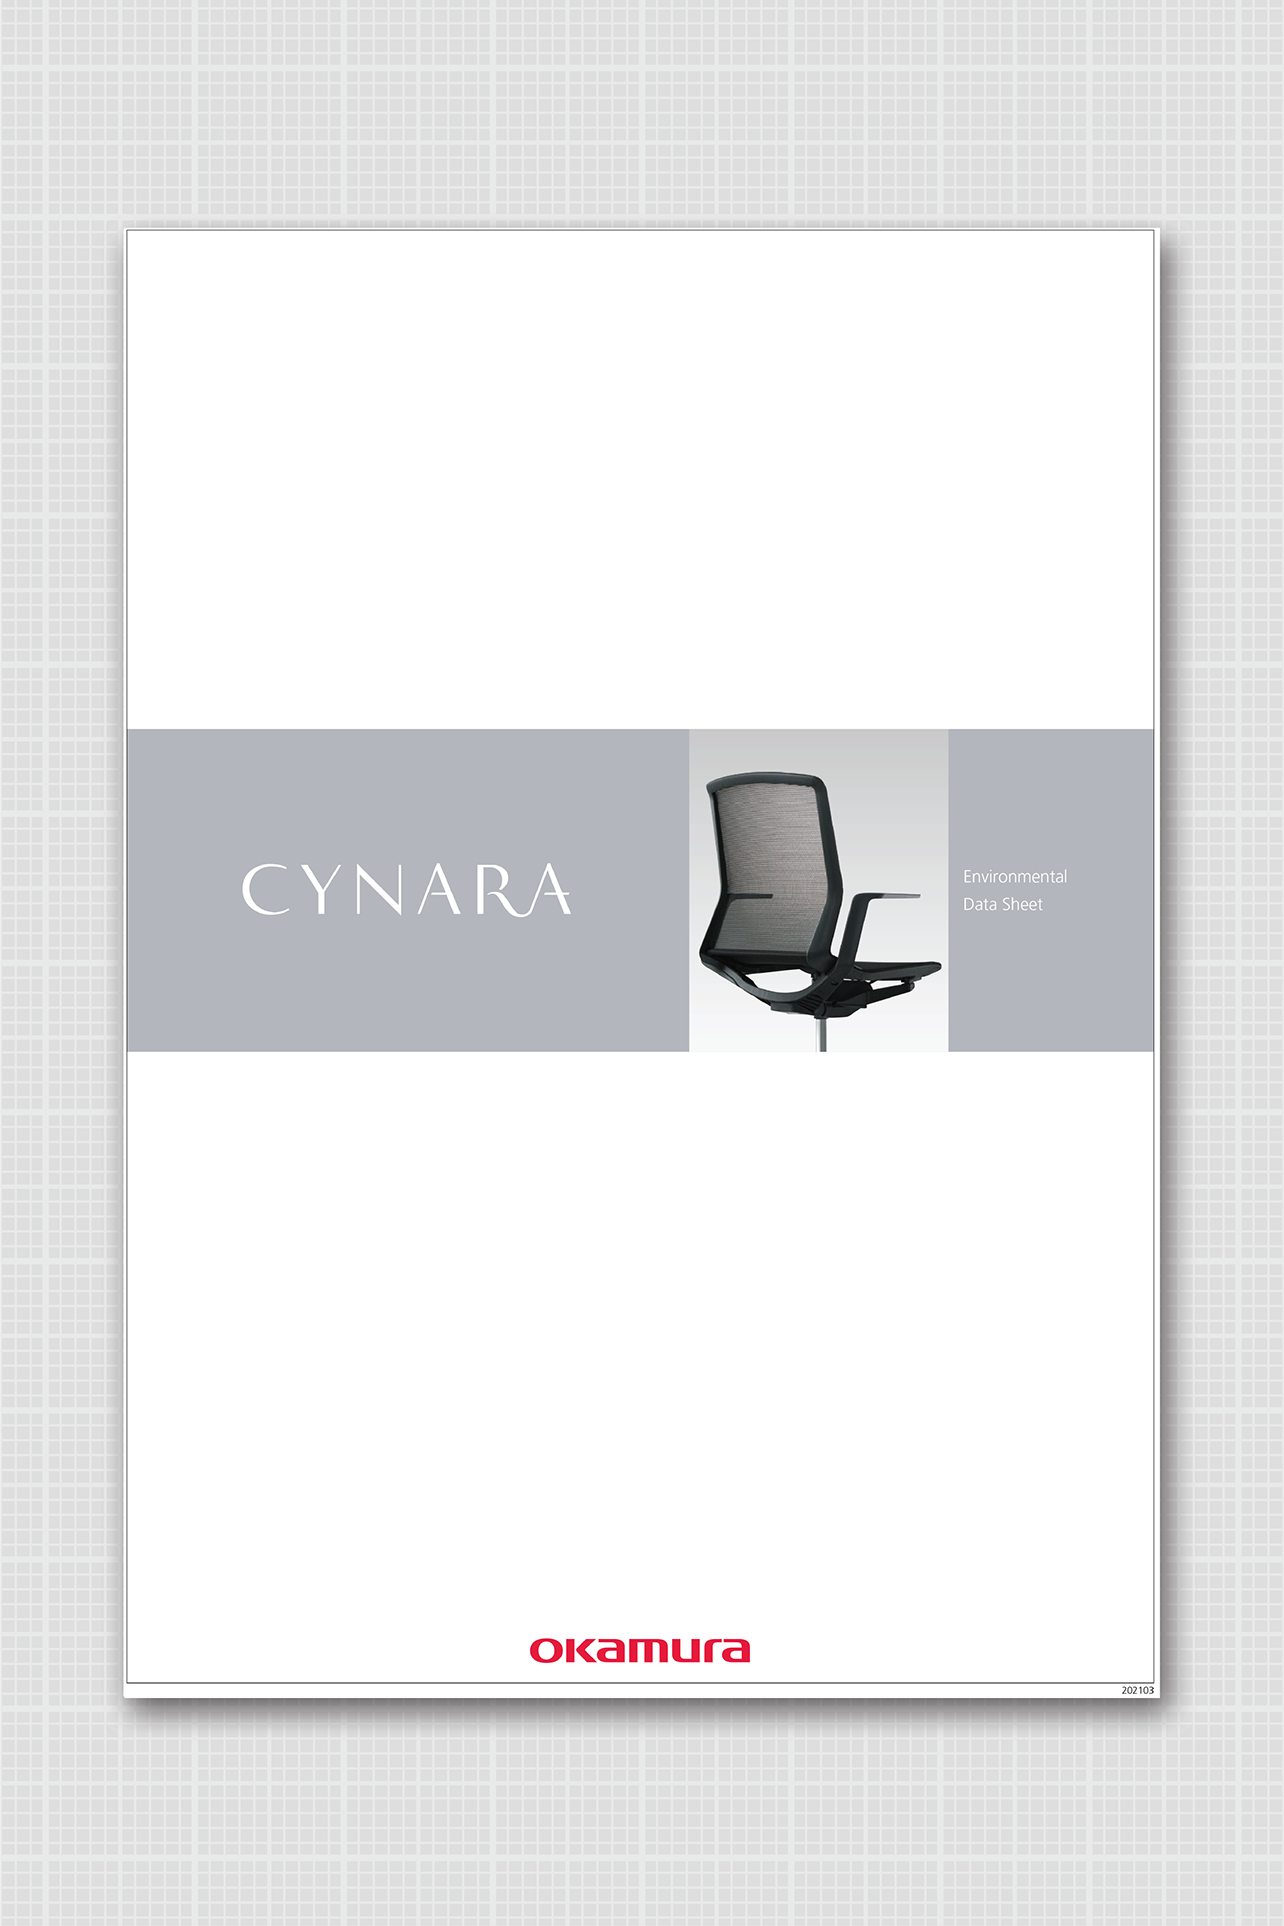 CYNARA Environmental Data Sheet